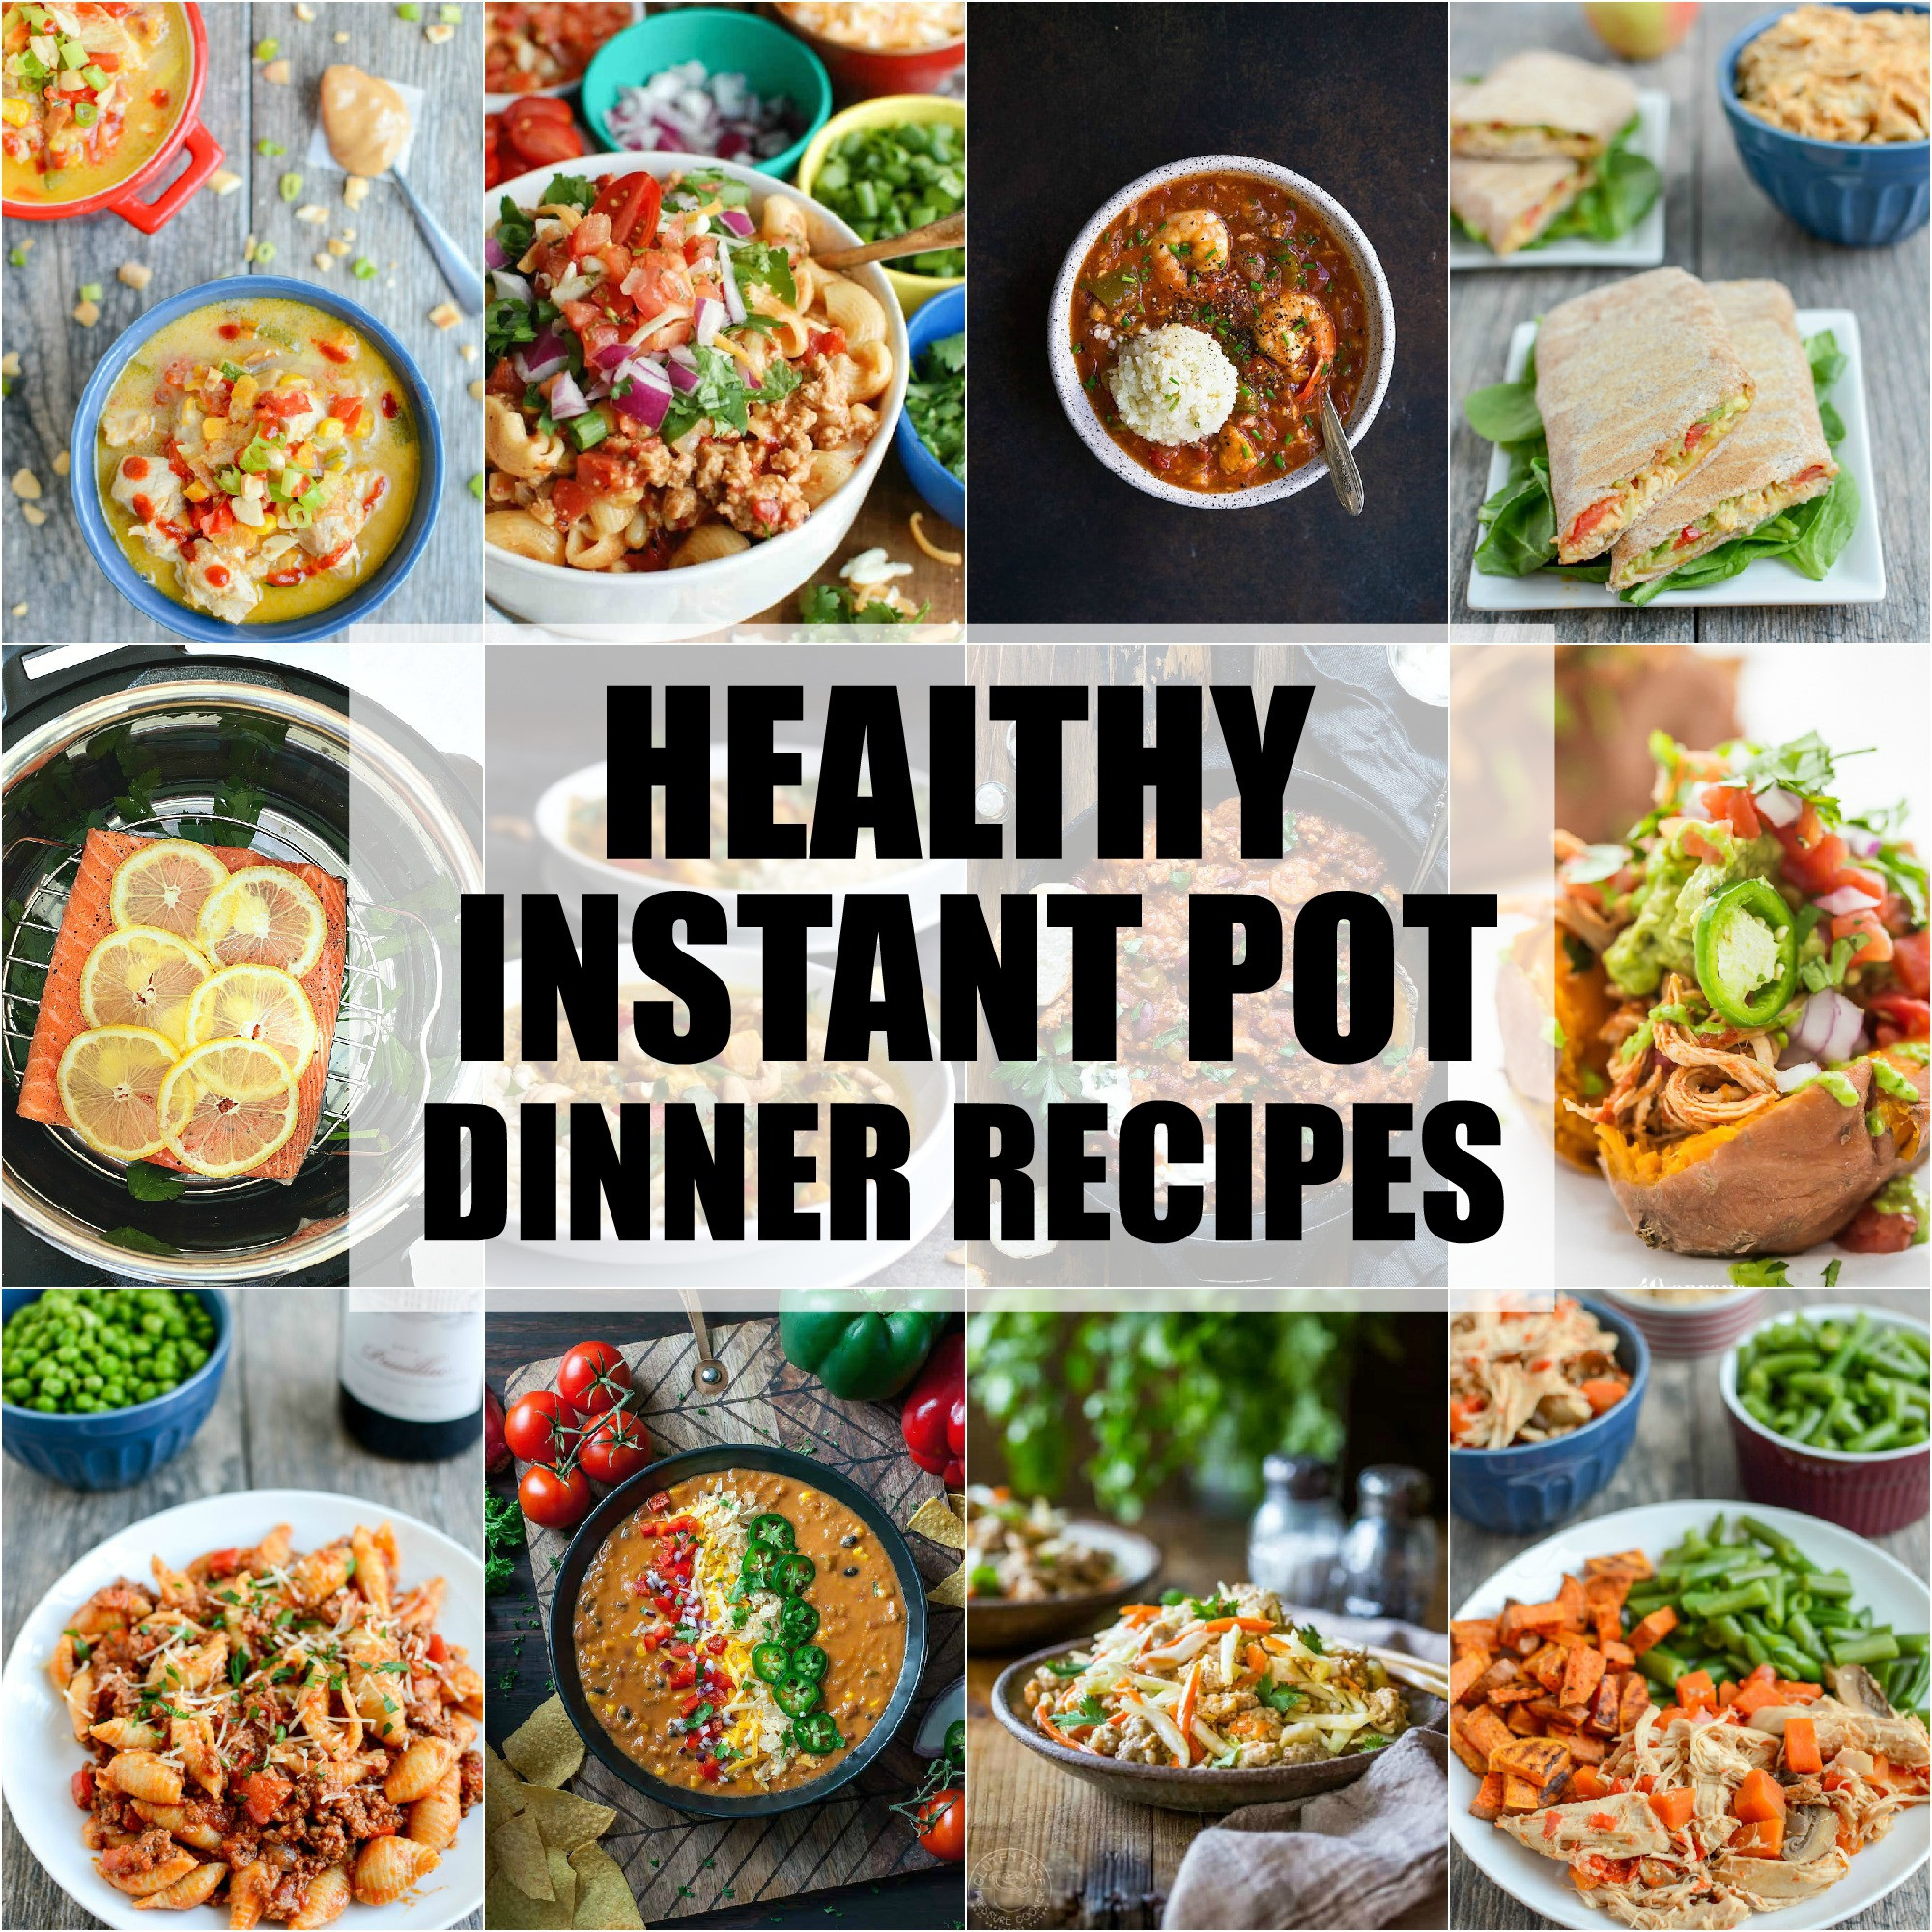 Easy Instant Pot Recipes Healthy
 Healthy Instant Pot Dinner Recipes